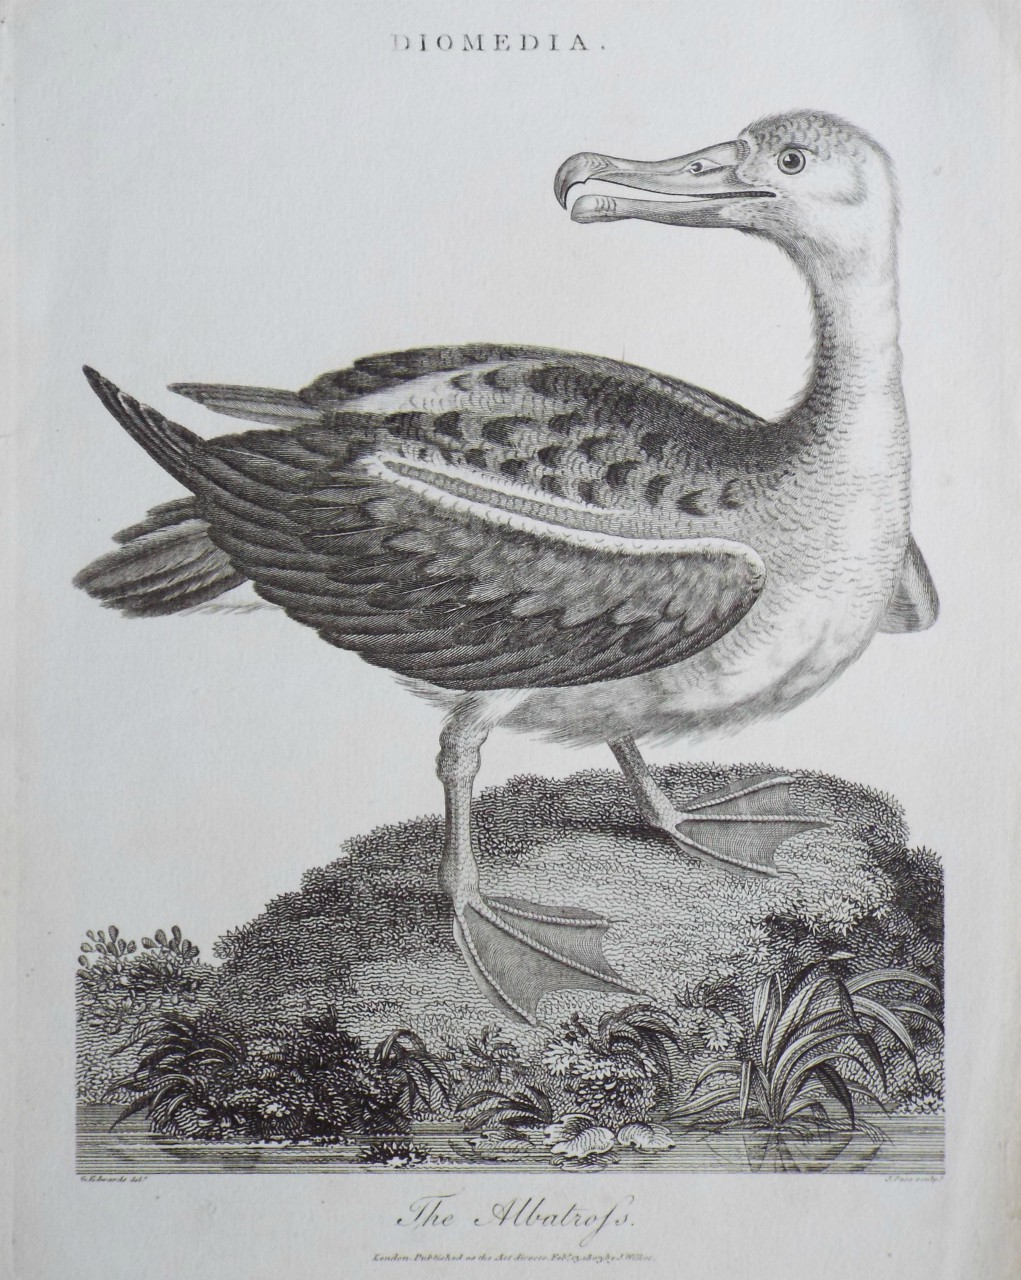 Print - Diomedia. The Albatross. - Pass